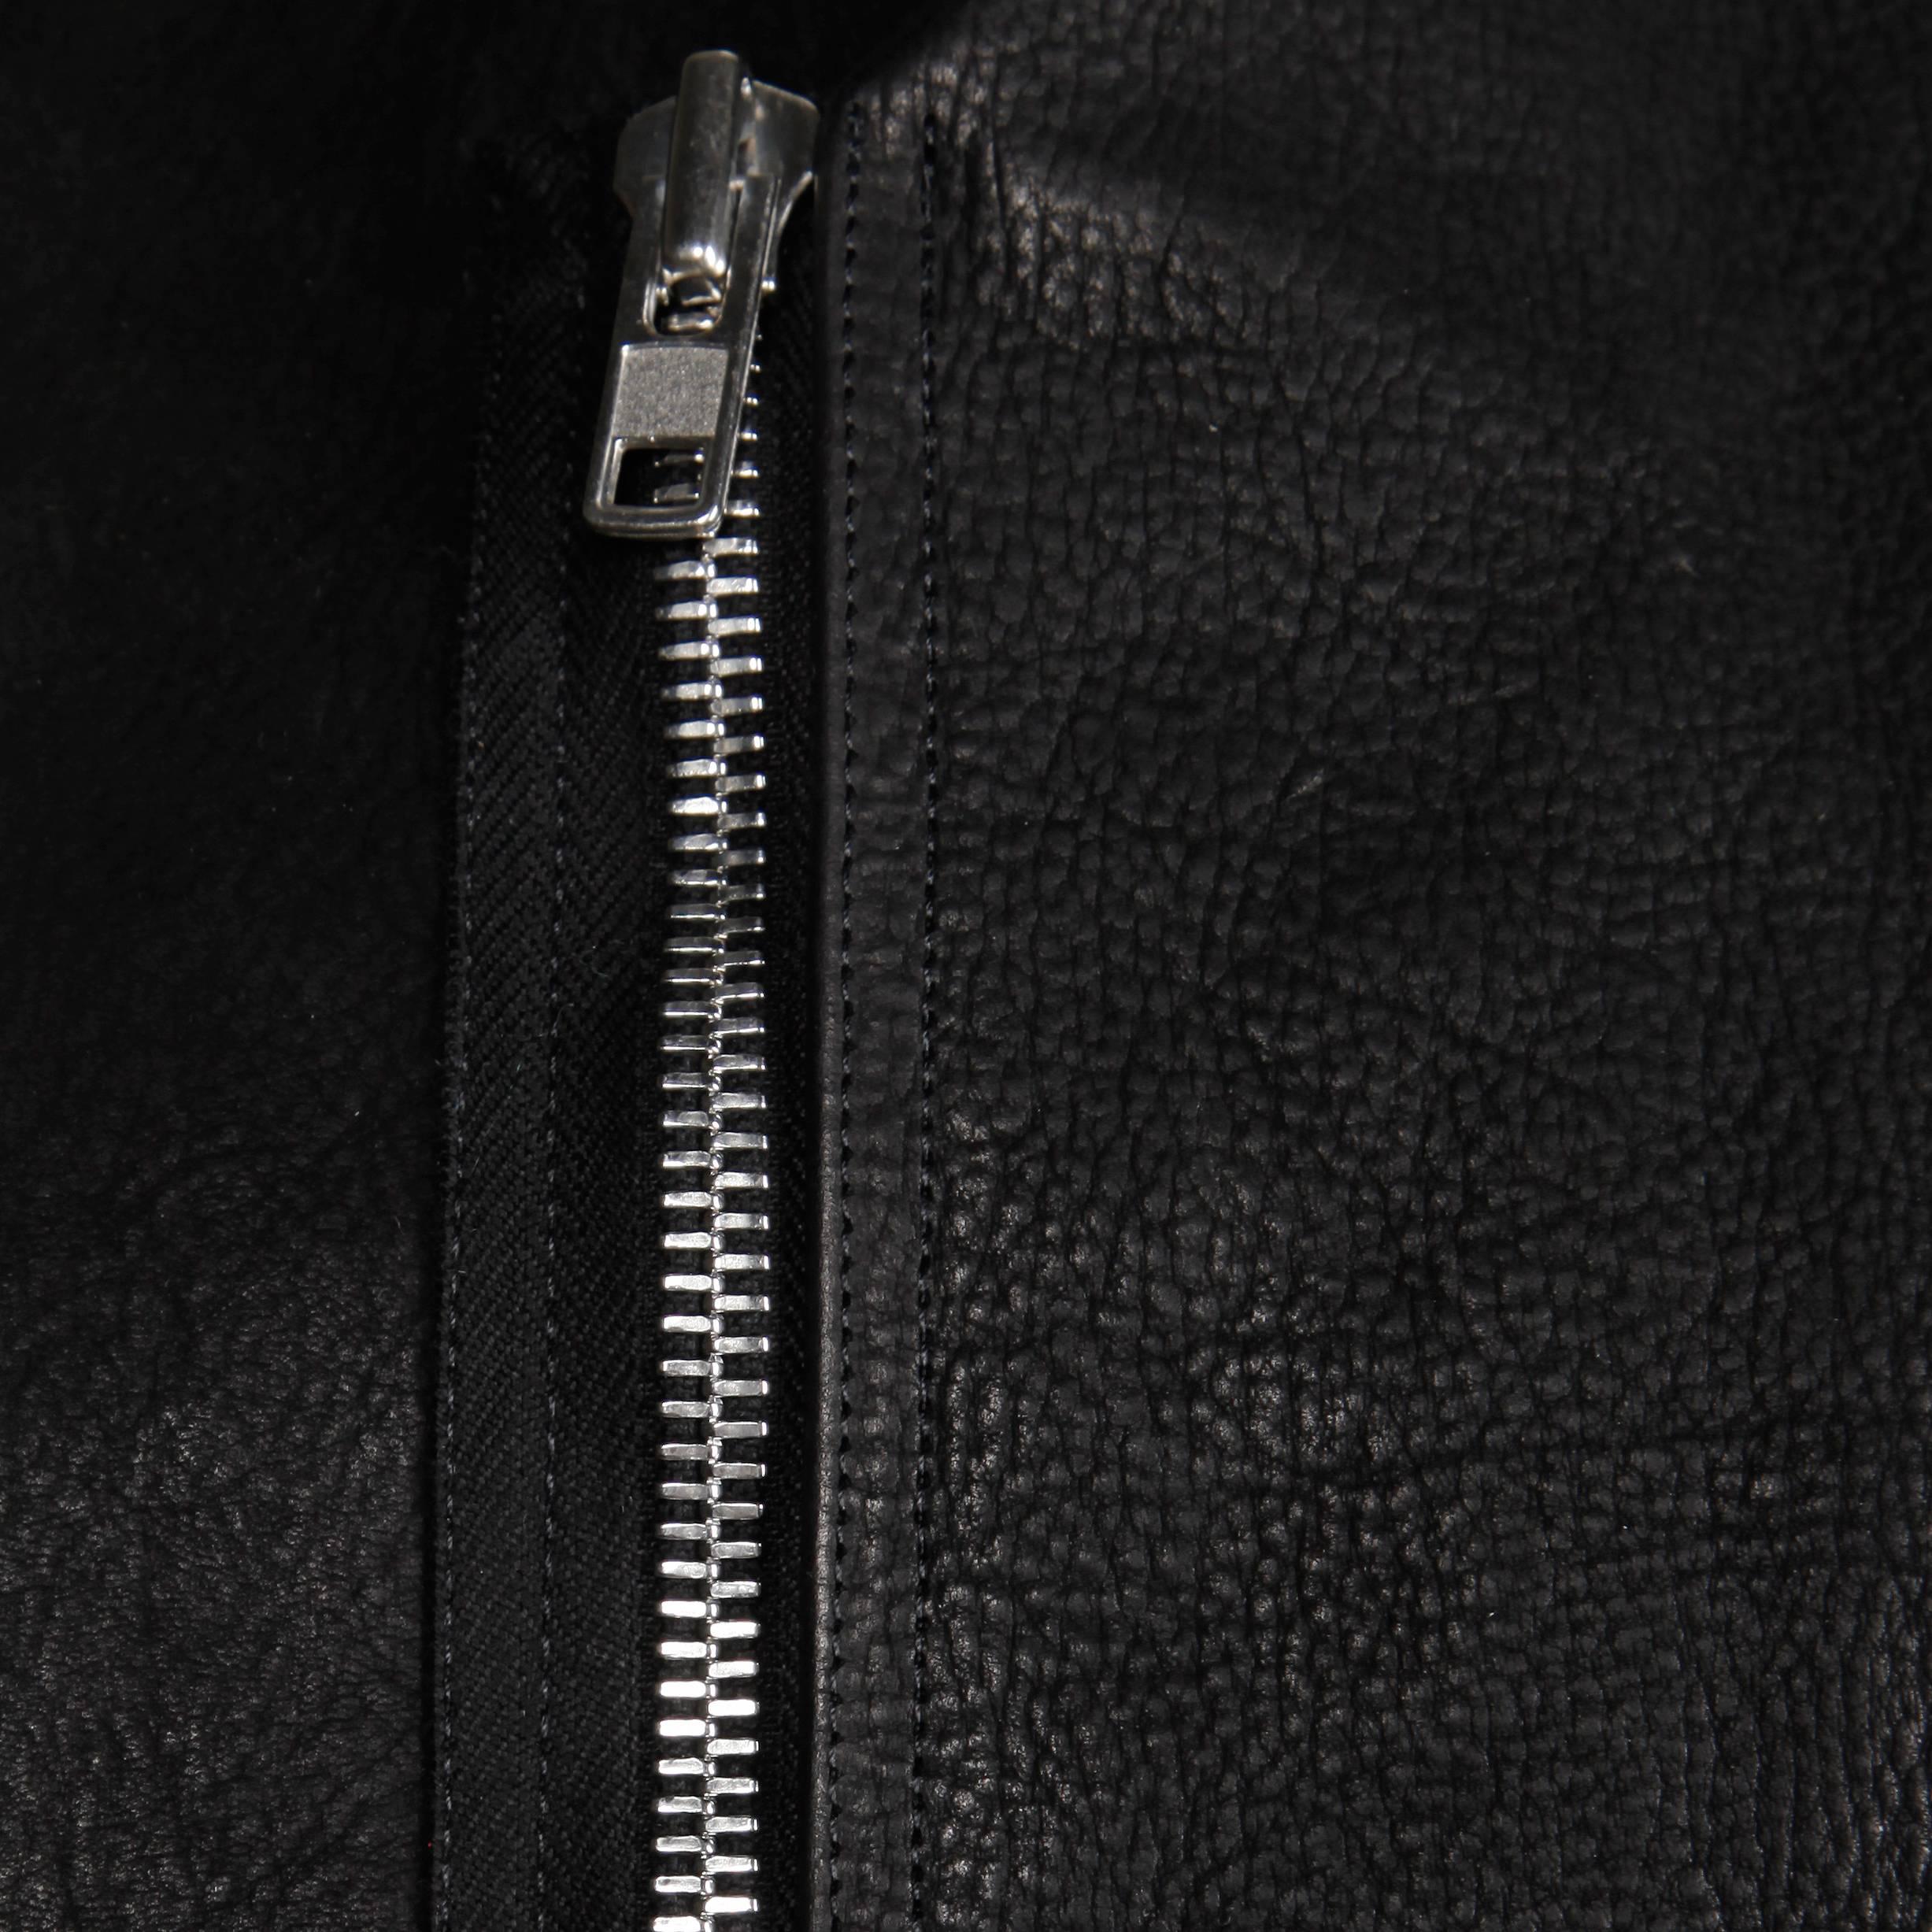 Women's Rick Owens Unworn with Tags S/S 2015 Avant Garde Black Leather Jacket or Vest For Sale